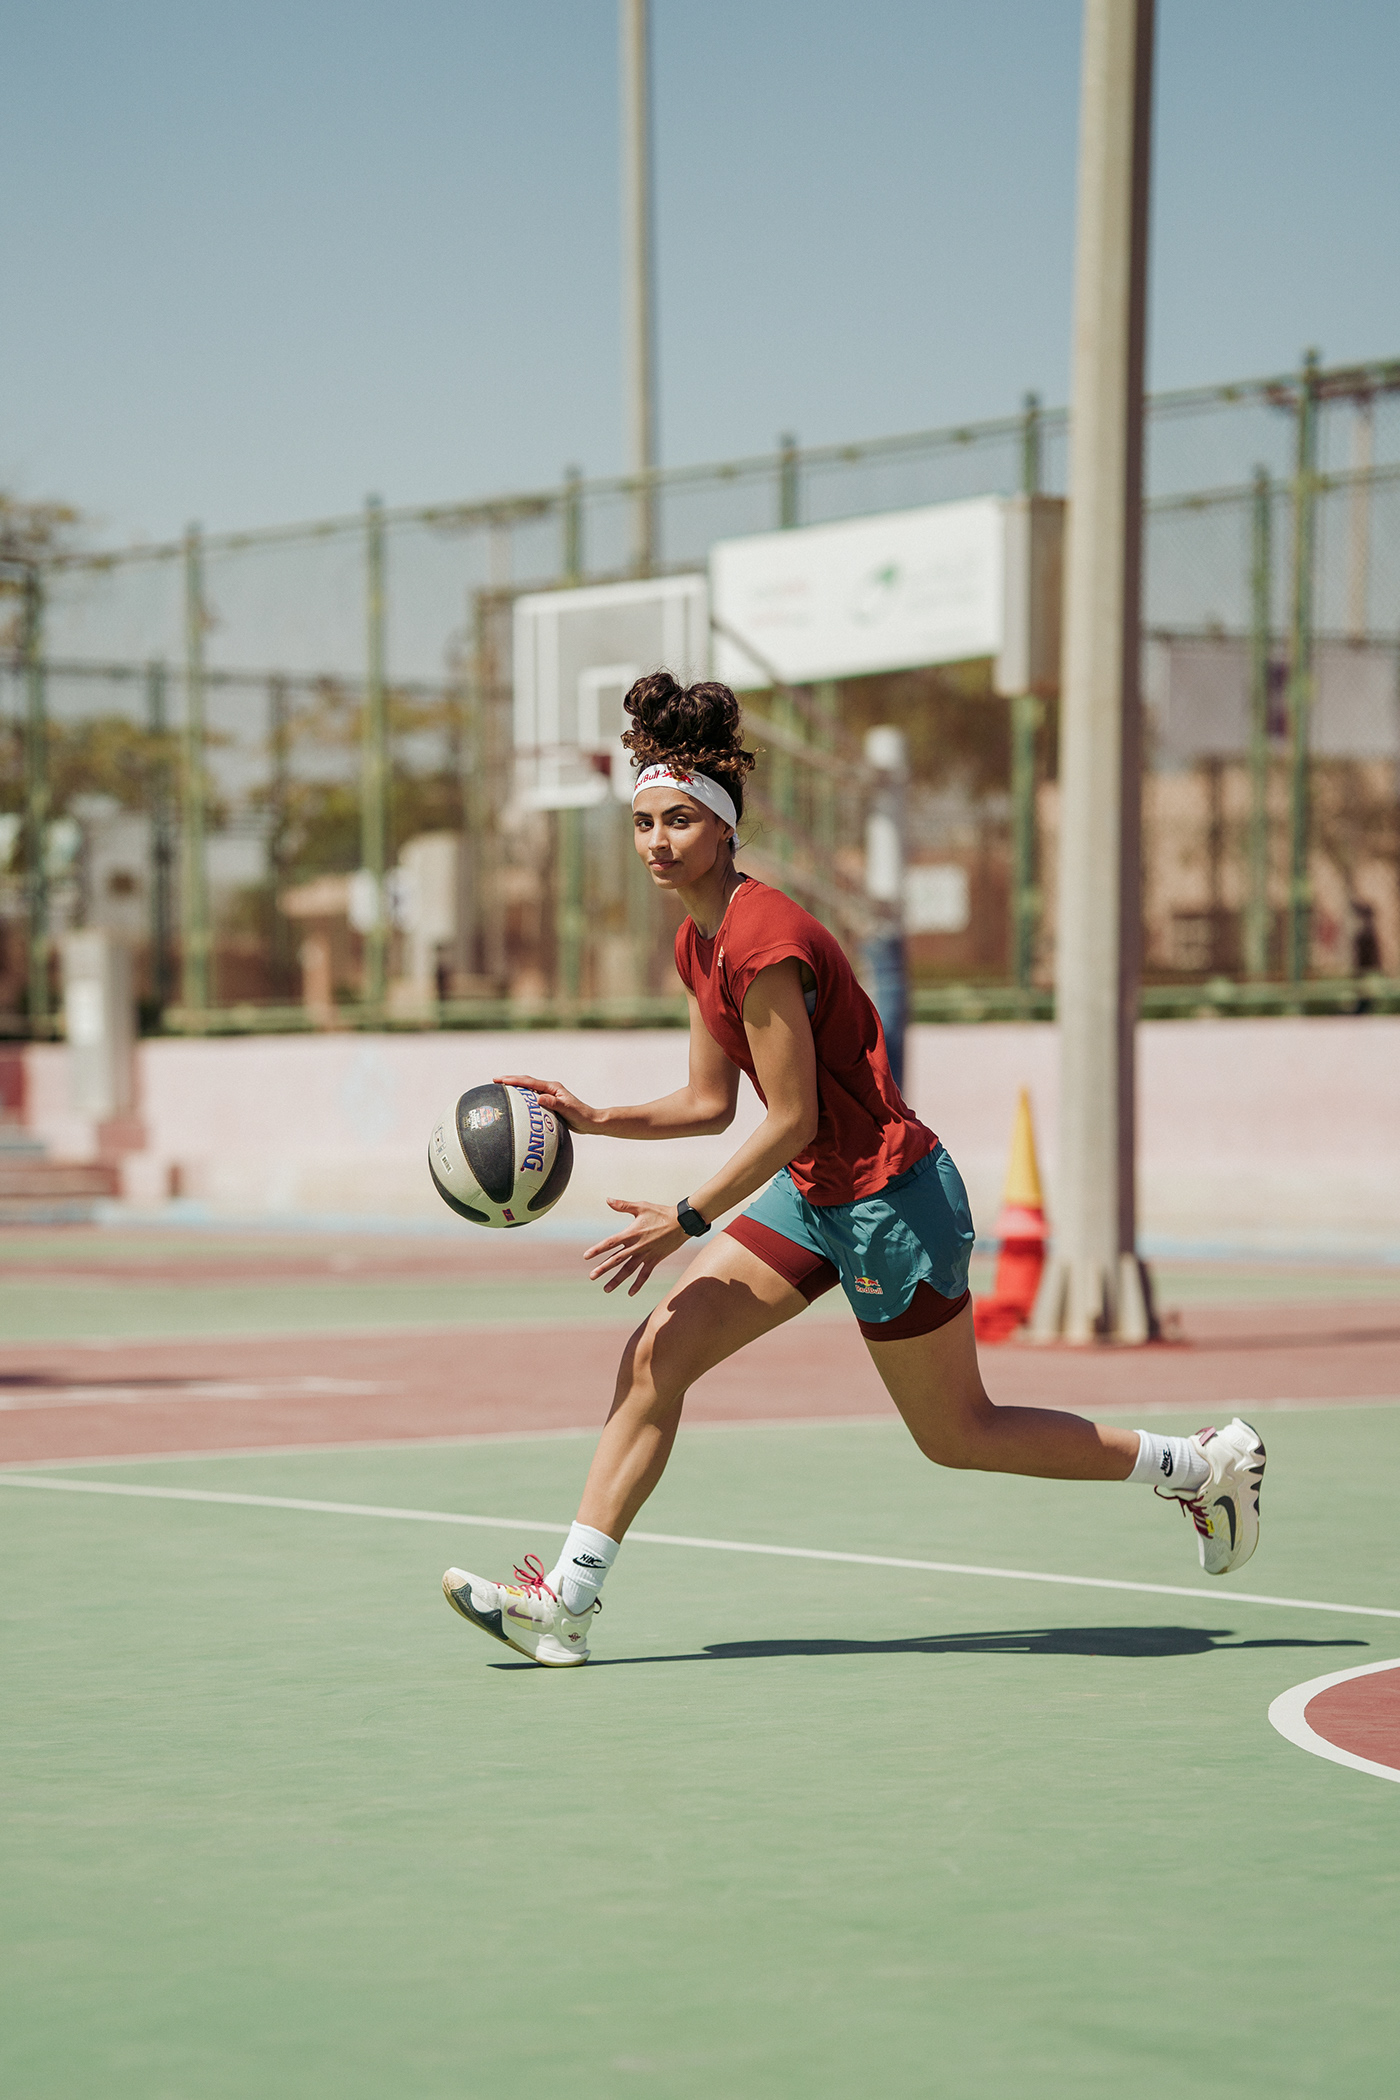 RedBull energy drink basketball sports Nike jordan adidas egypt NBA